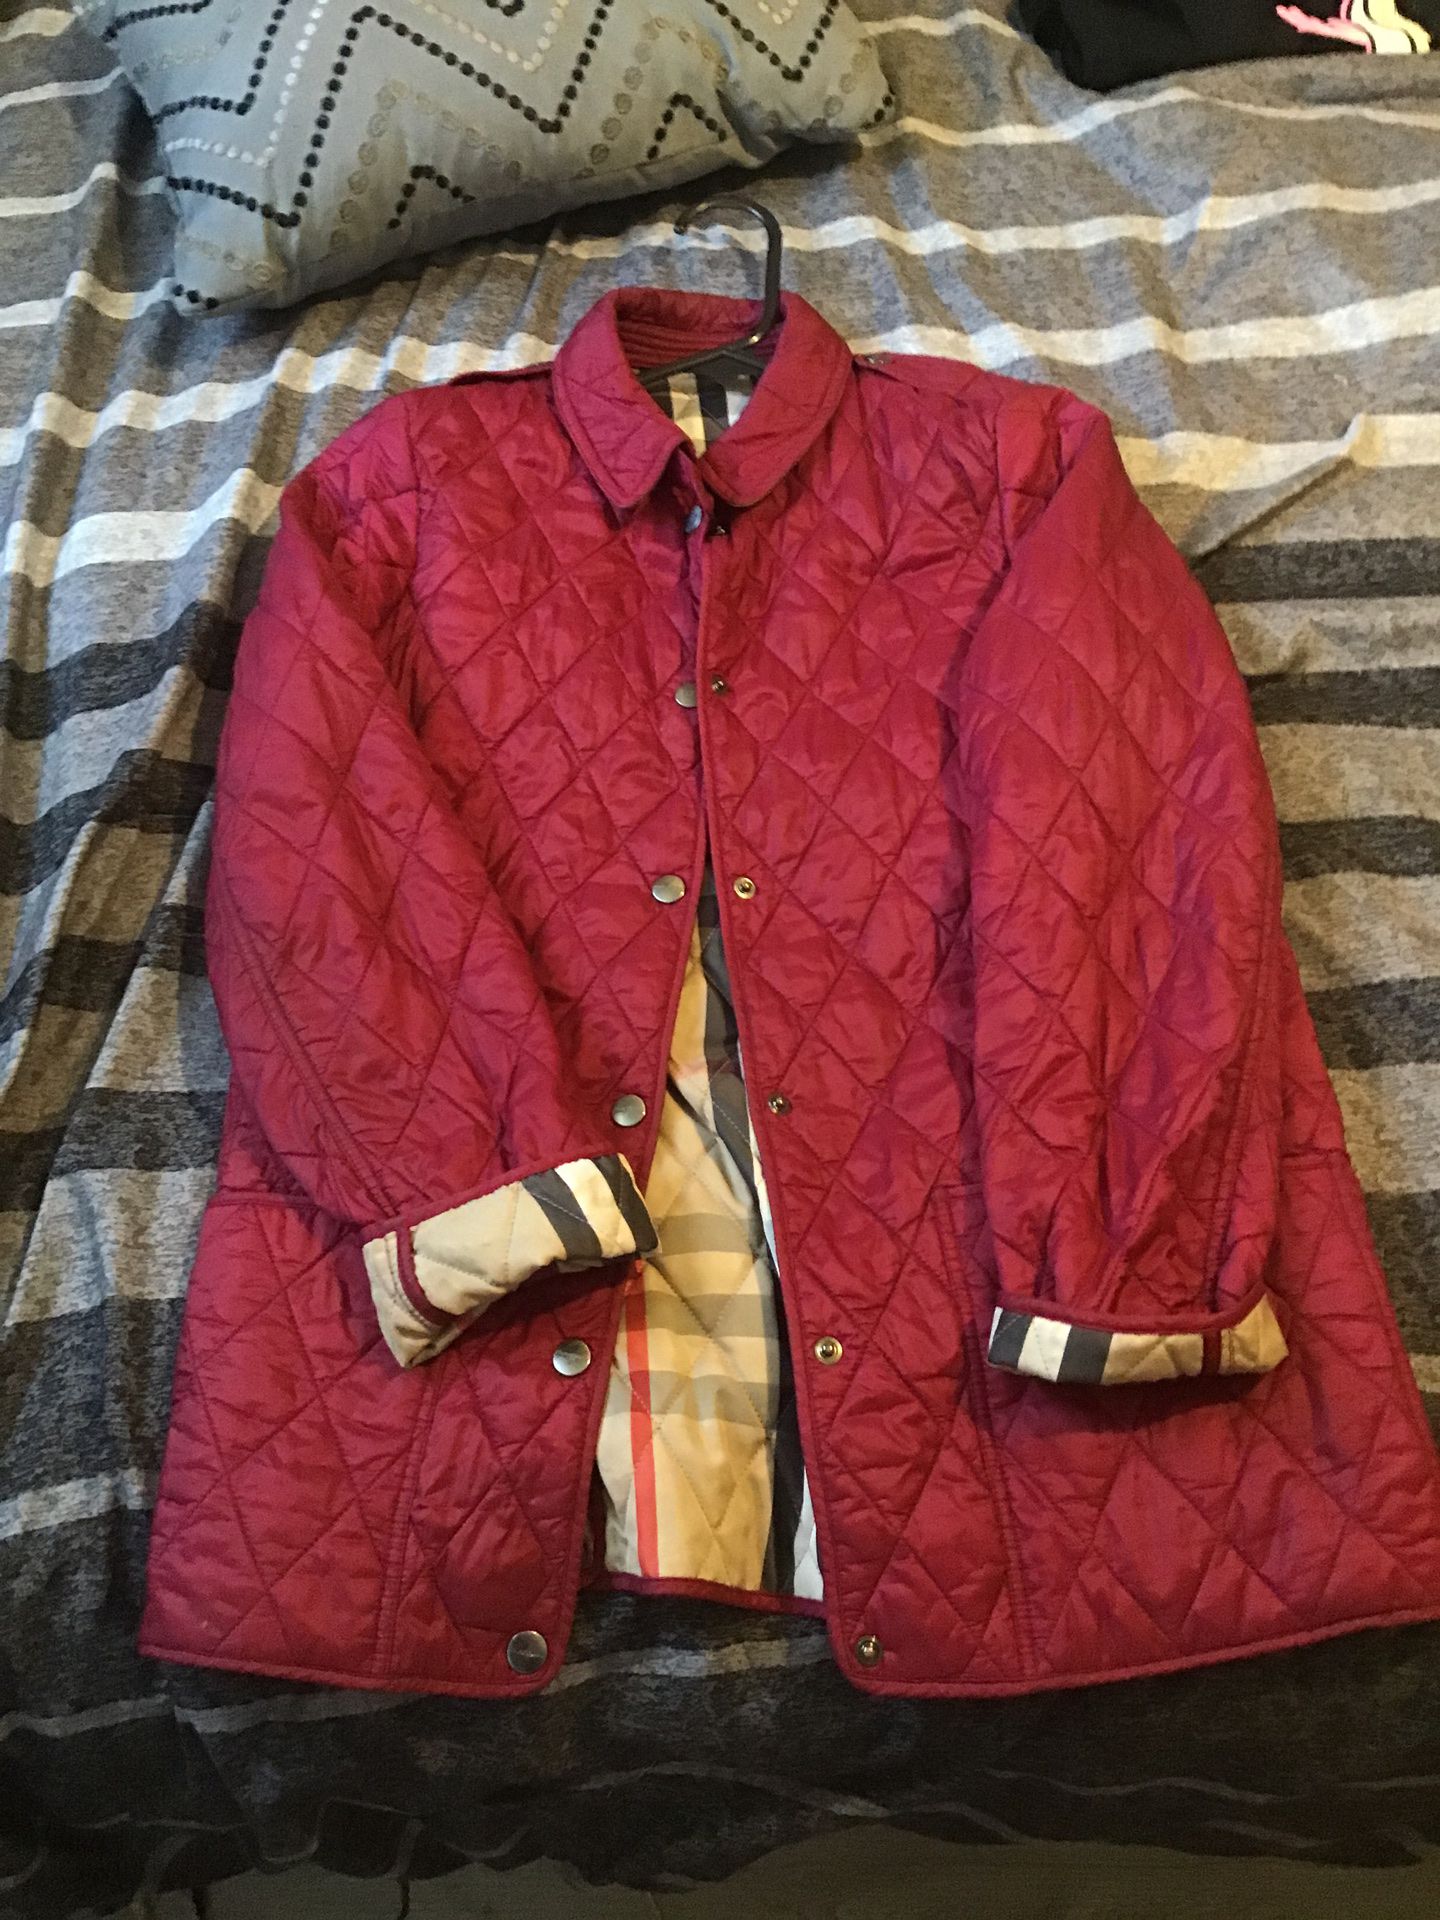 Burberry jacket size 14